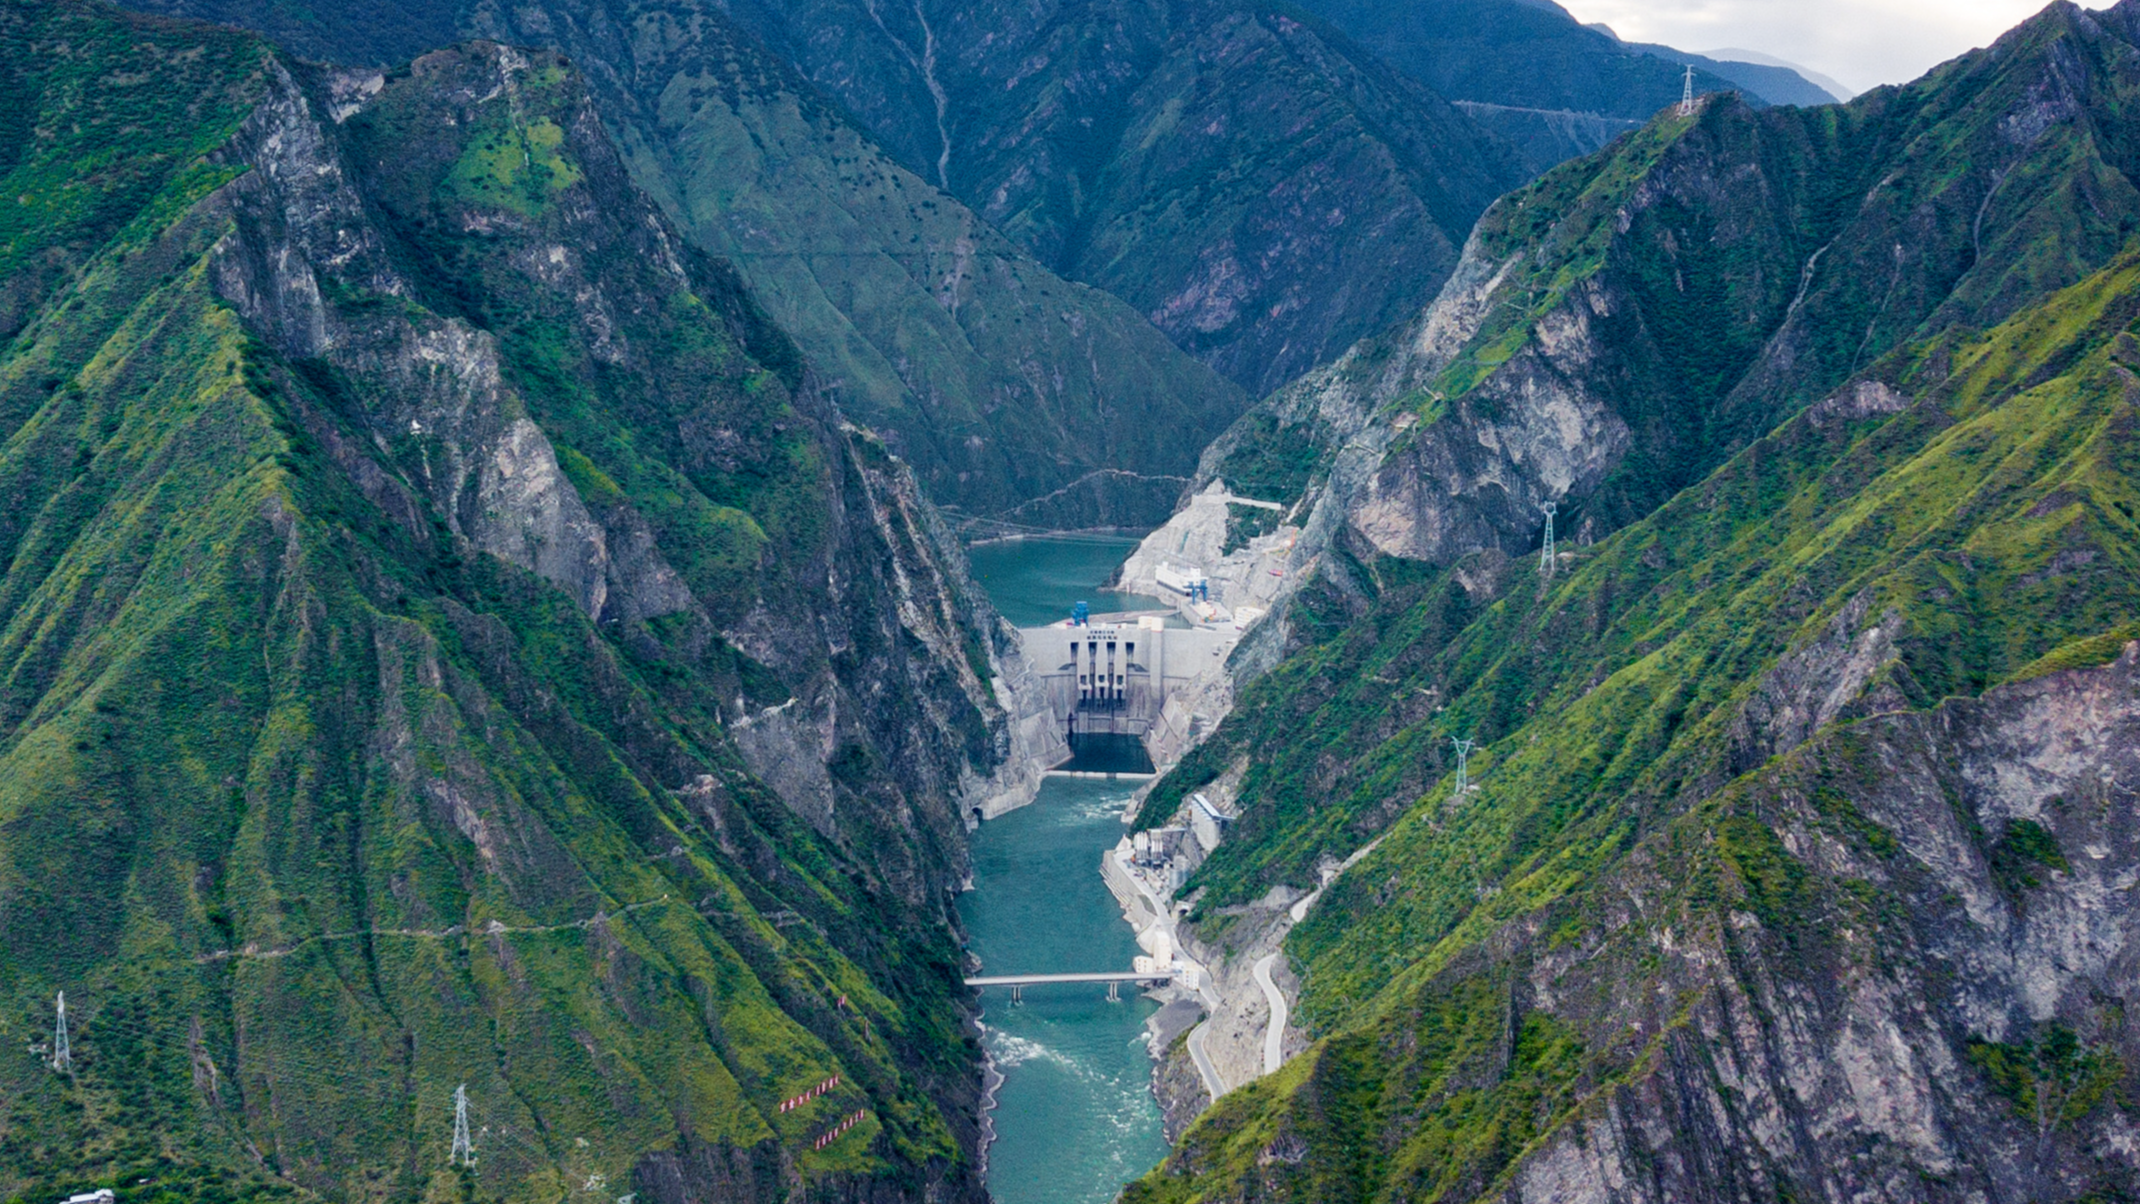 A view of the Yangfanggou Hydropower Station on the Yalong River, southwest China's Sichuan Province. /Yalong Hydro